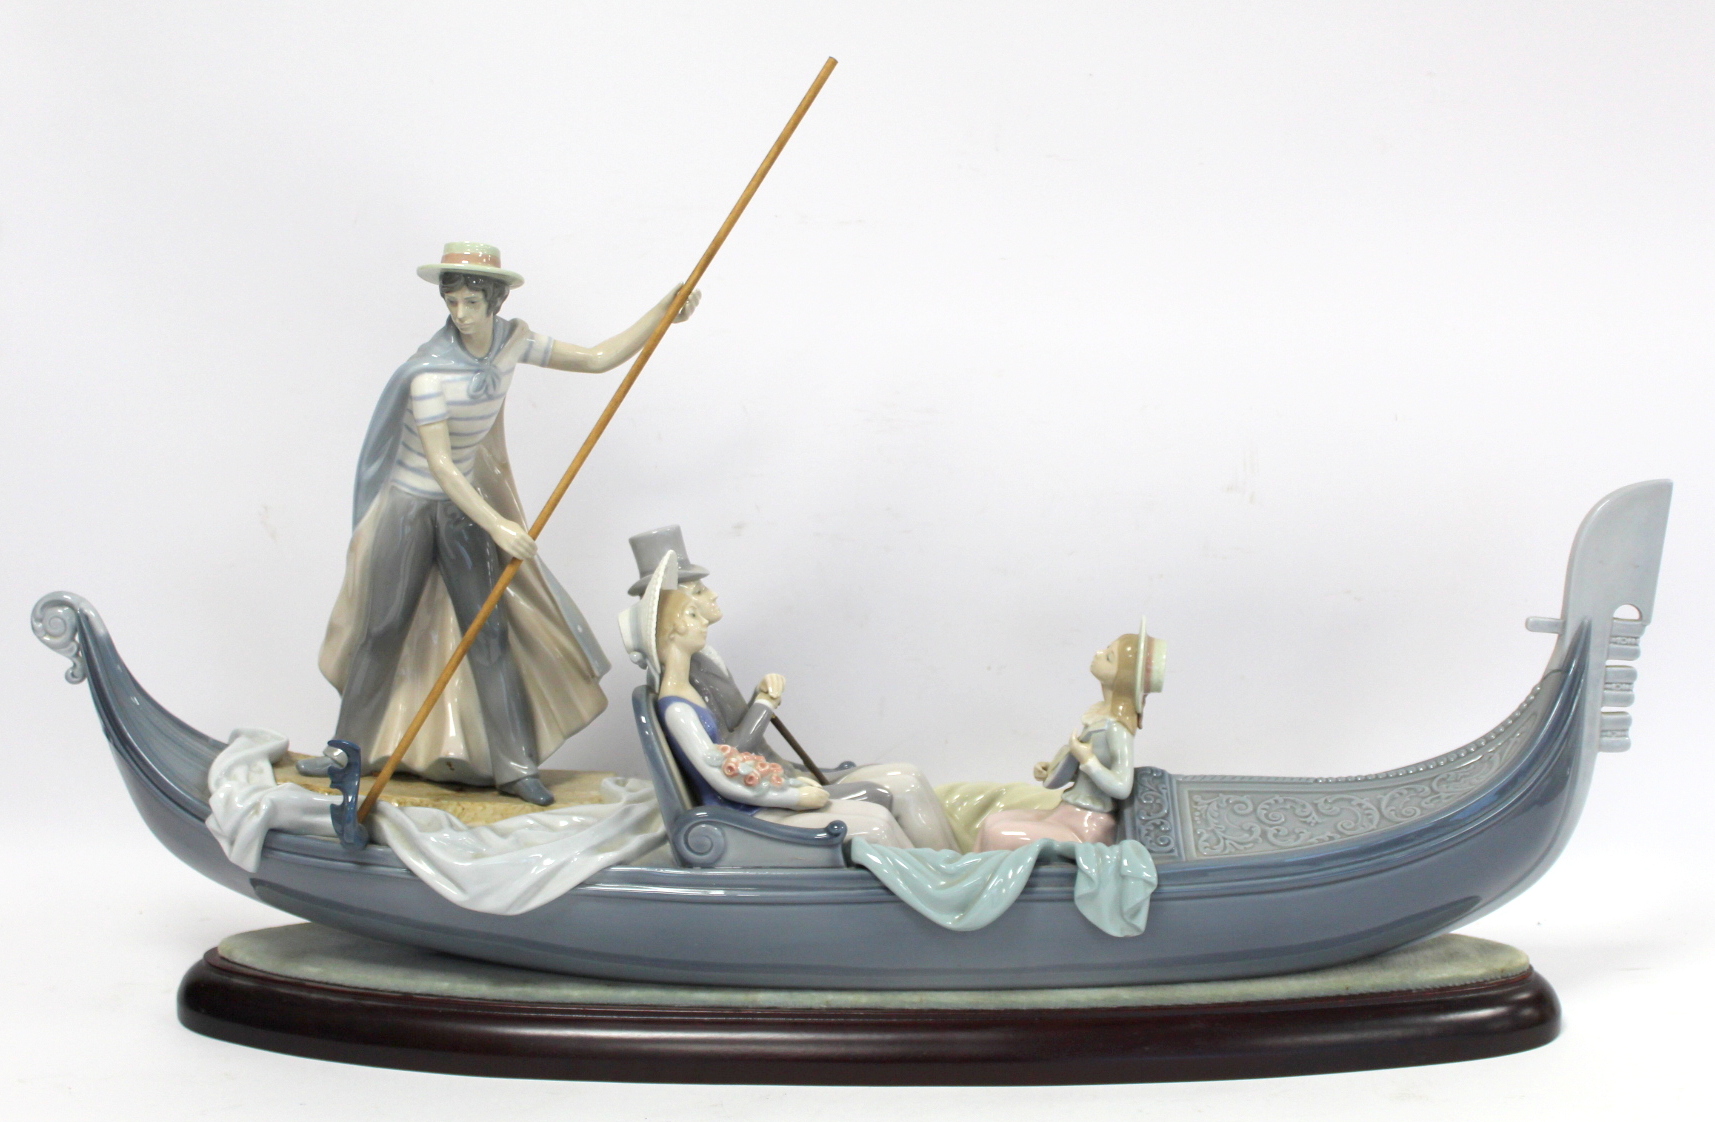 Large Lladro porcelain figure group "En La Gondola" (In the Gondola), model no. 1350, in the form of